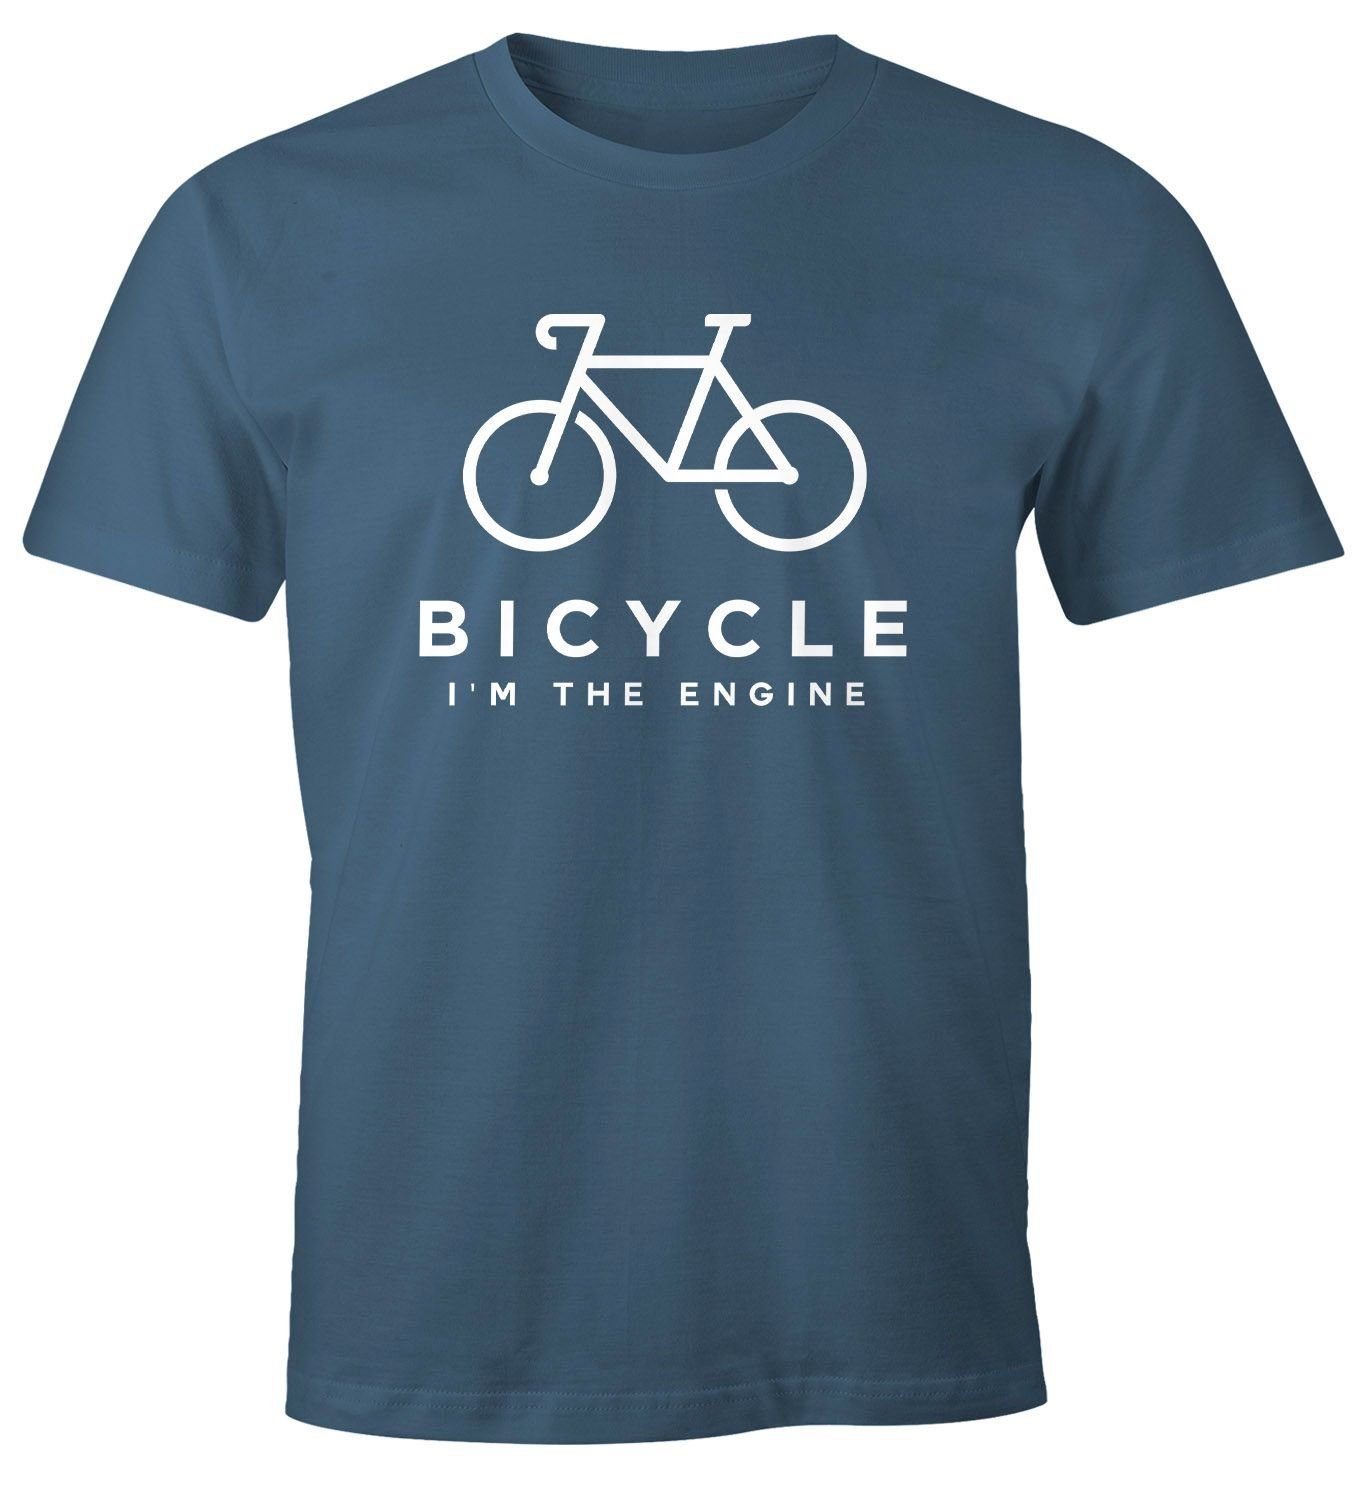 Print-Shirt Engine MoonWorks Moonworks® Fun-Shirt mit lustig Sprüche blau Herren Spruch Print Bicycle Fahrrad I'm T-Shirt Rad Bike the